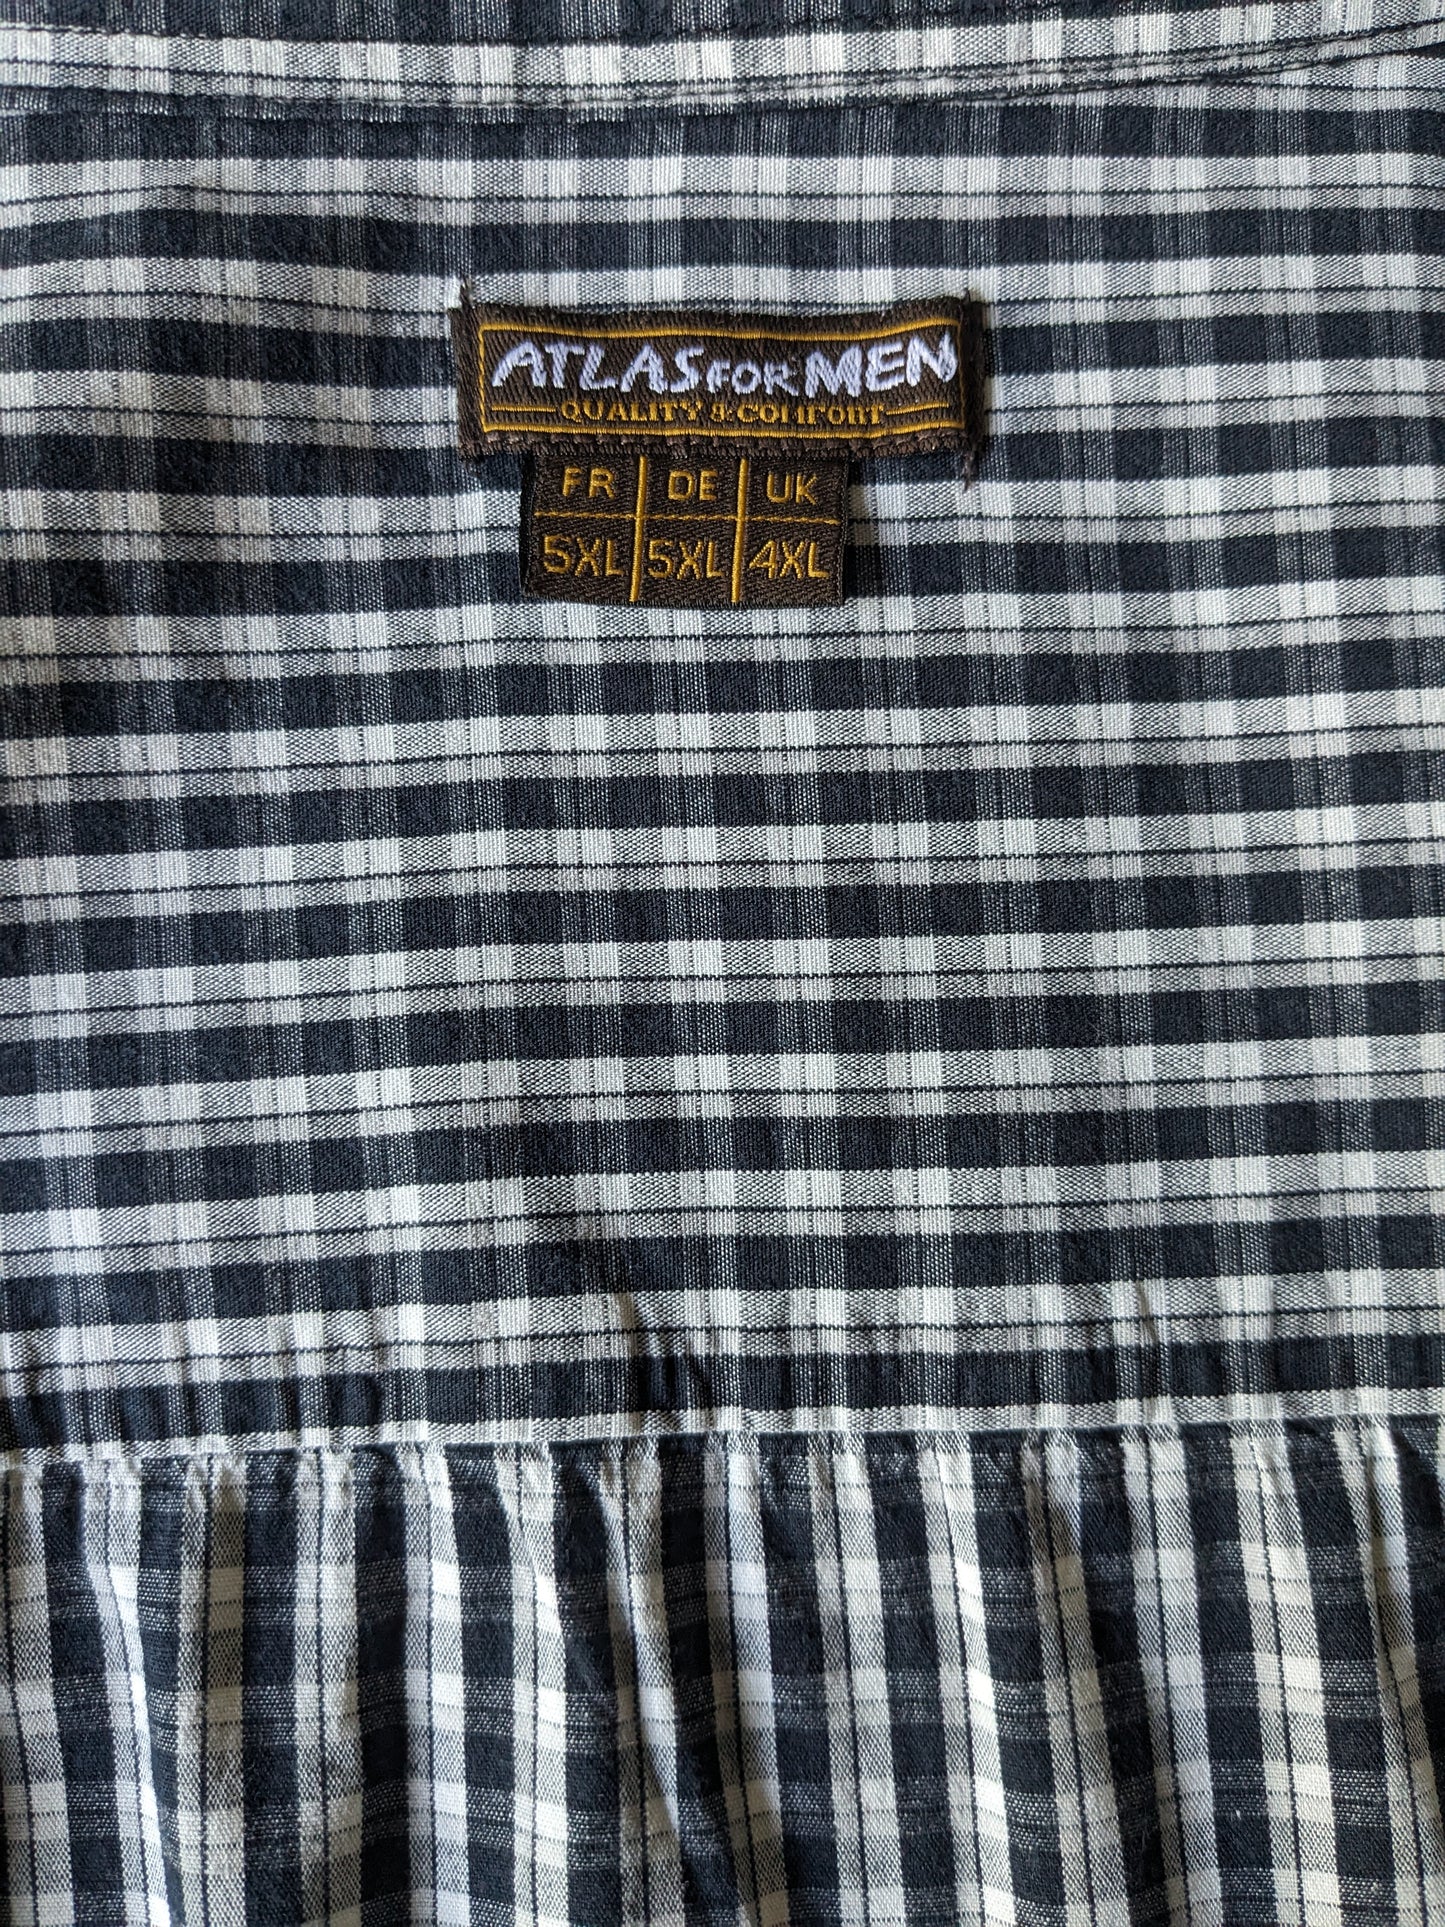 Atlas for Men overhemd. Beige Zwart geruit. Maat 5XL / XXXXXL.